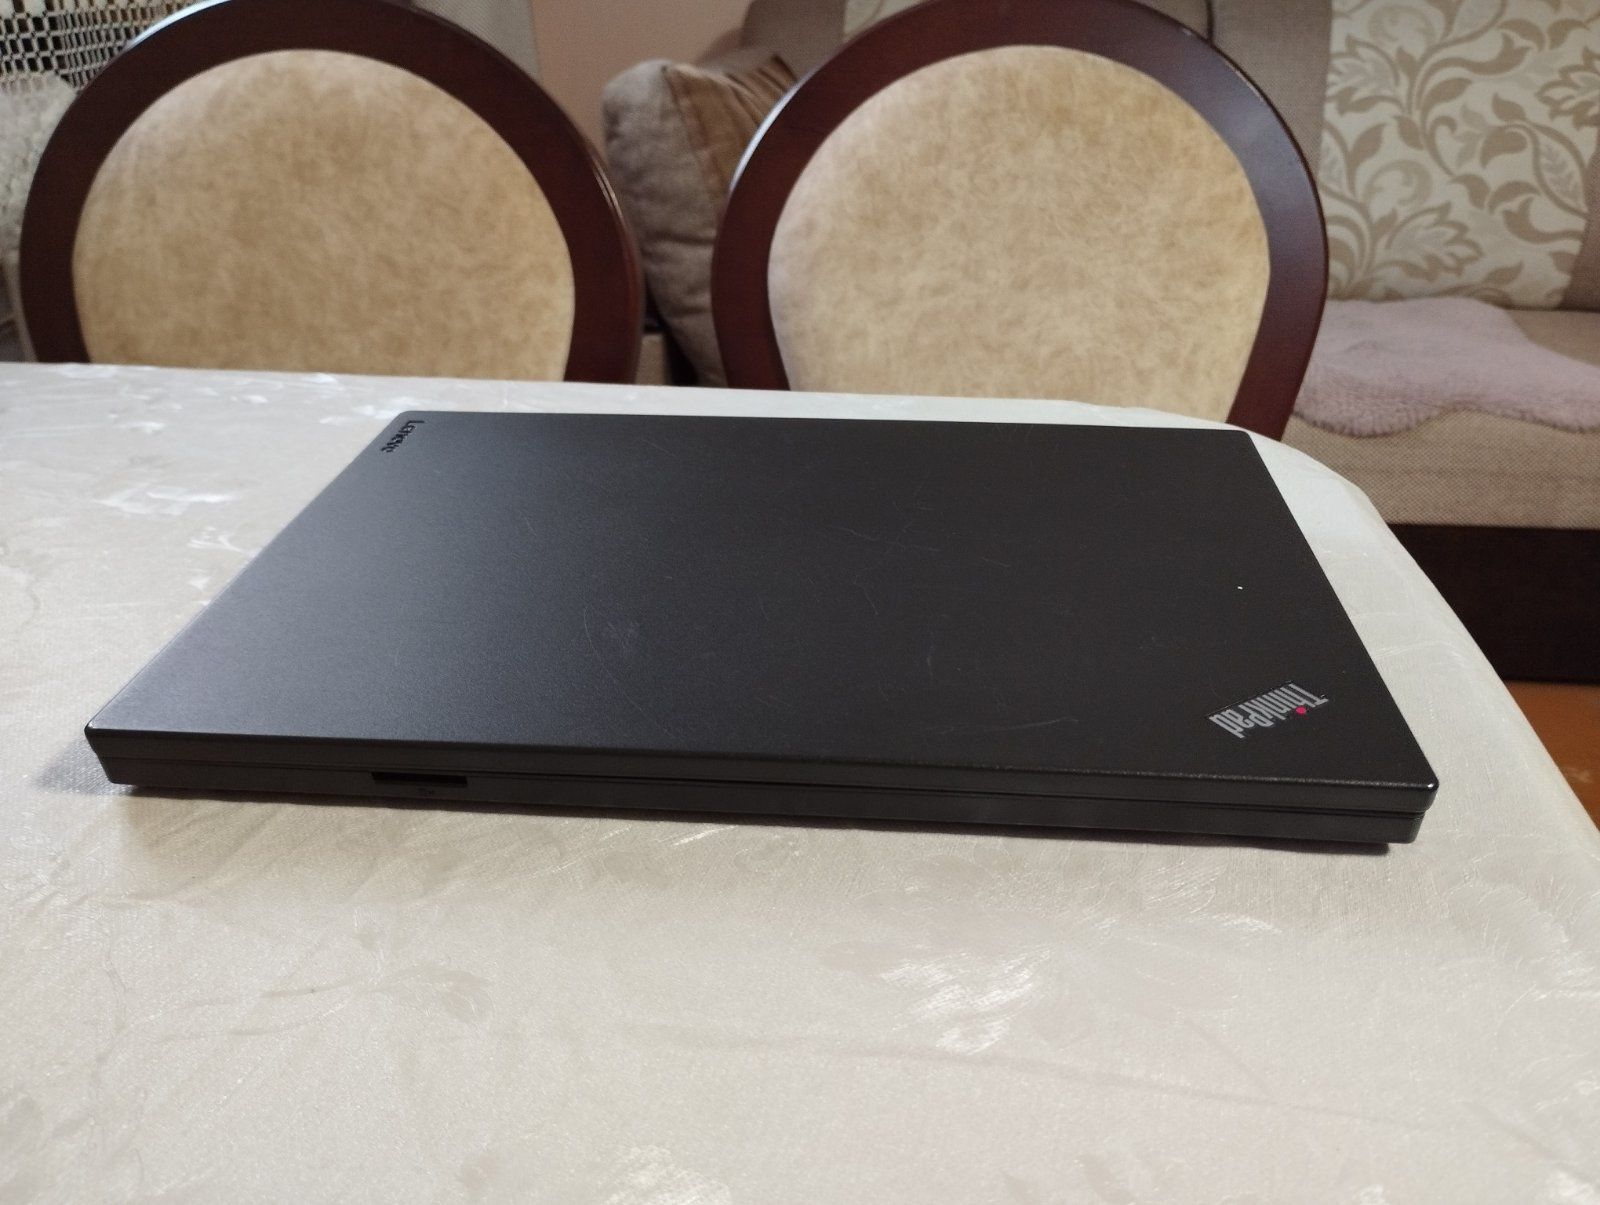 Lenovo ThinkPad L460 i7 6500u AMD Radeon R5 m330